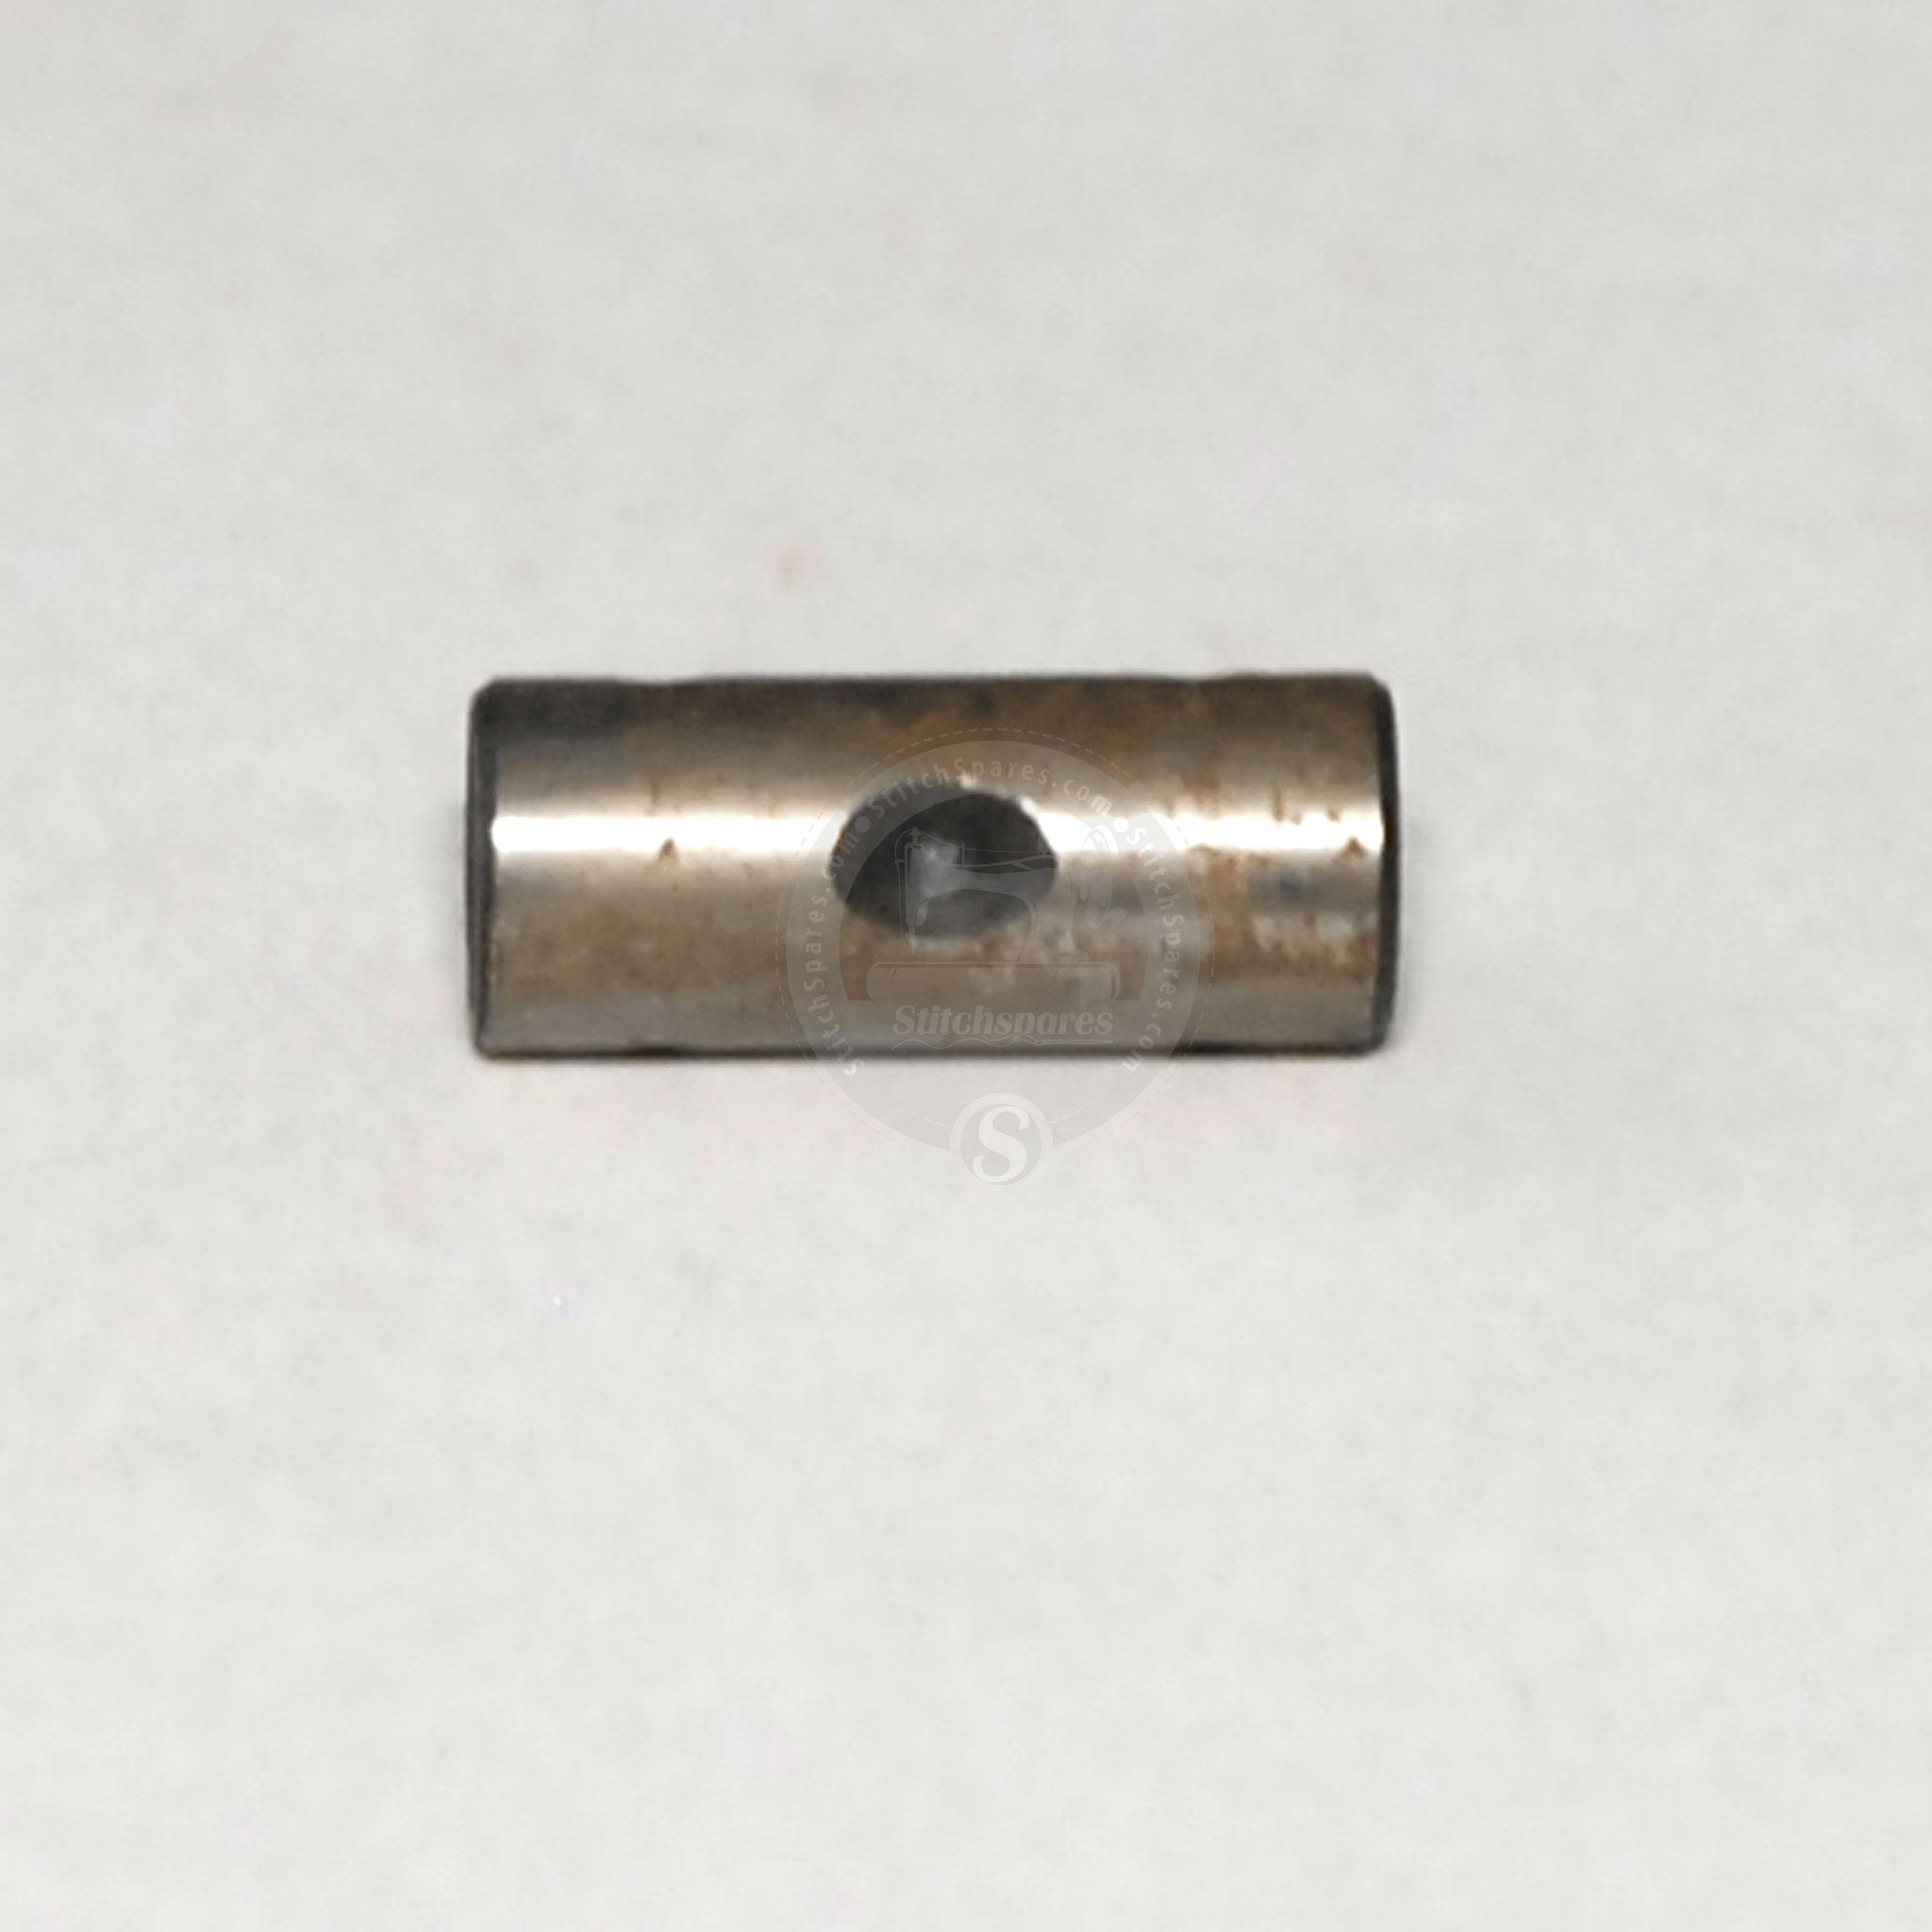 71-431 Pin de junta de barra impulsora de lanzadera Kansai Faltbed Interlcok (Flatlock) Máquina